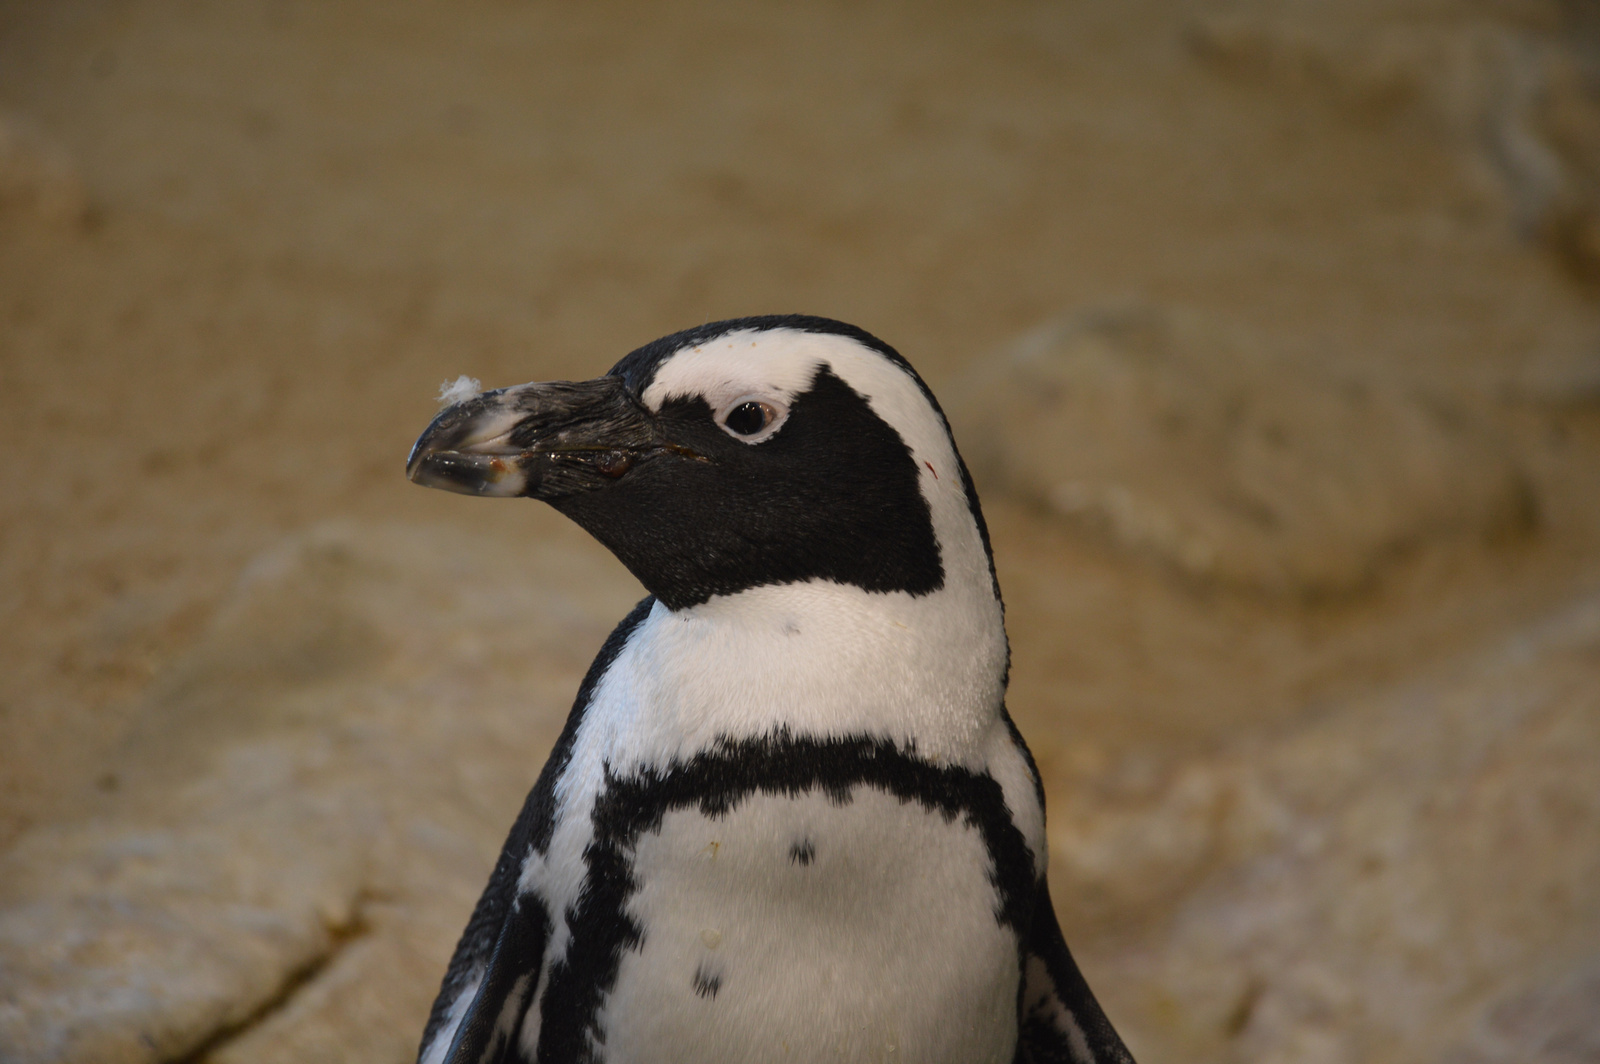 Two Oceans Aquarium Pingvin portre